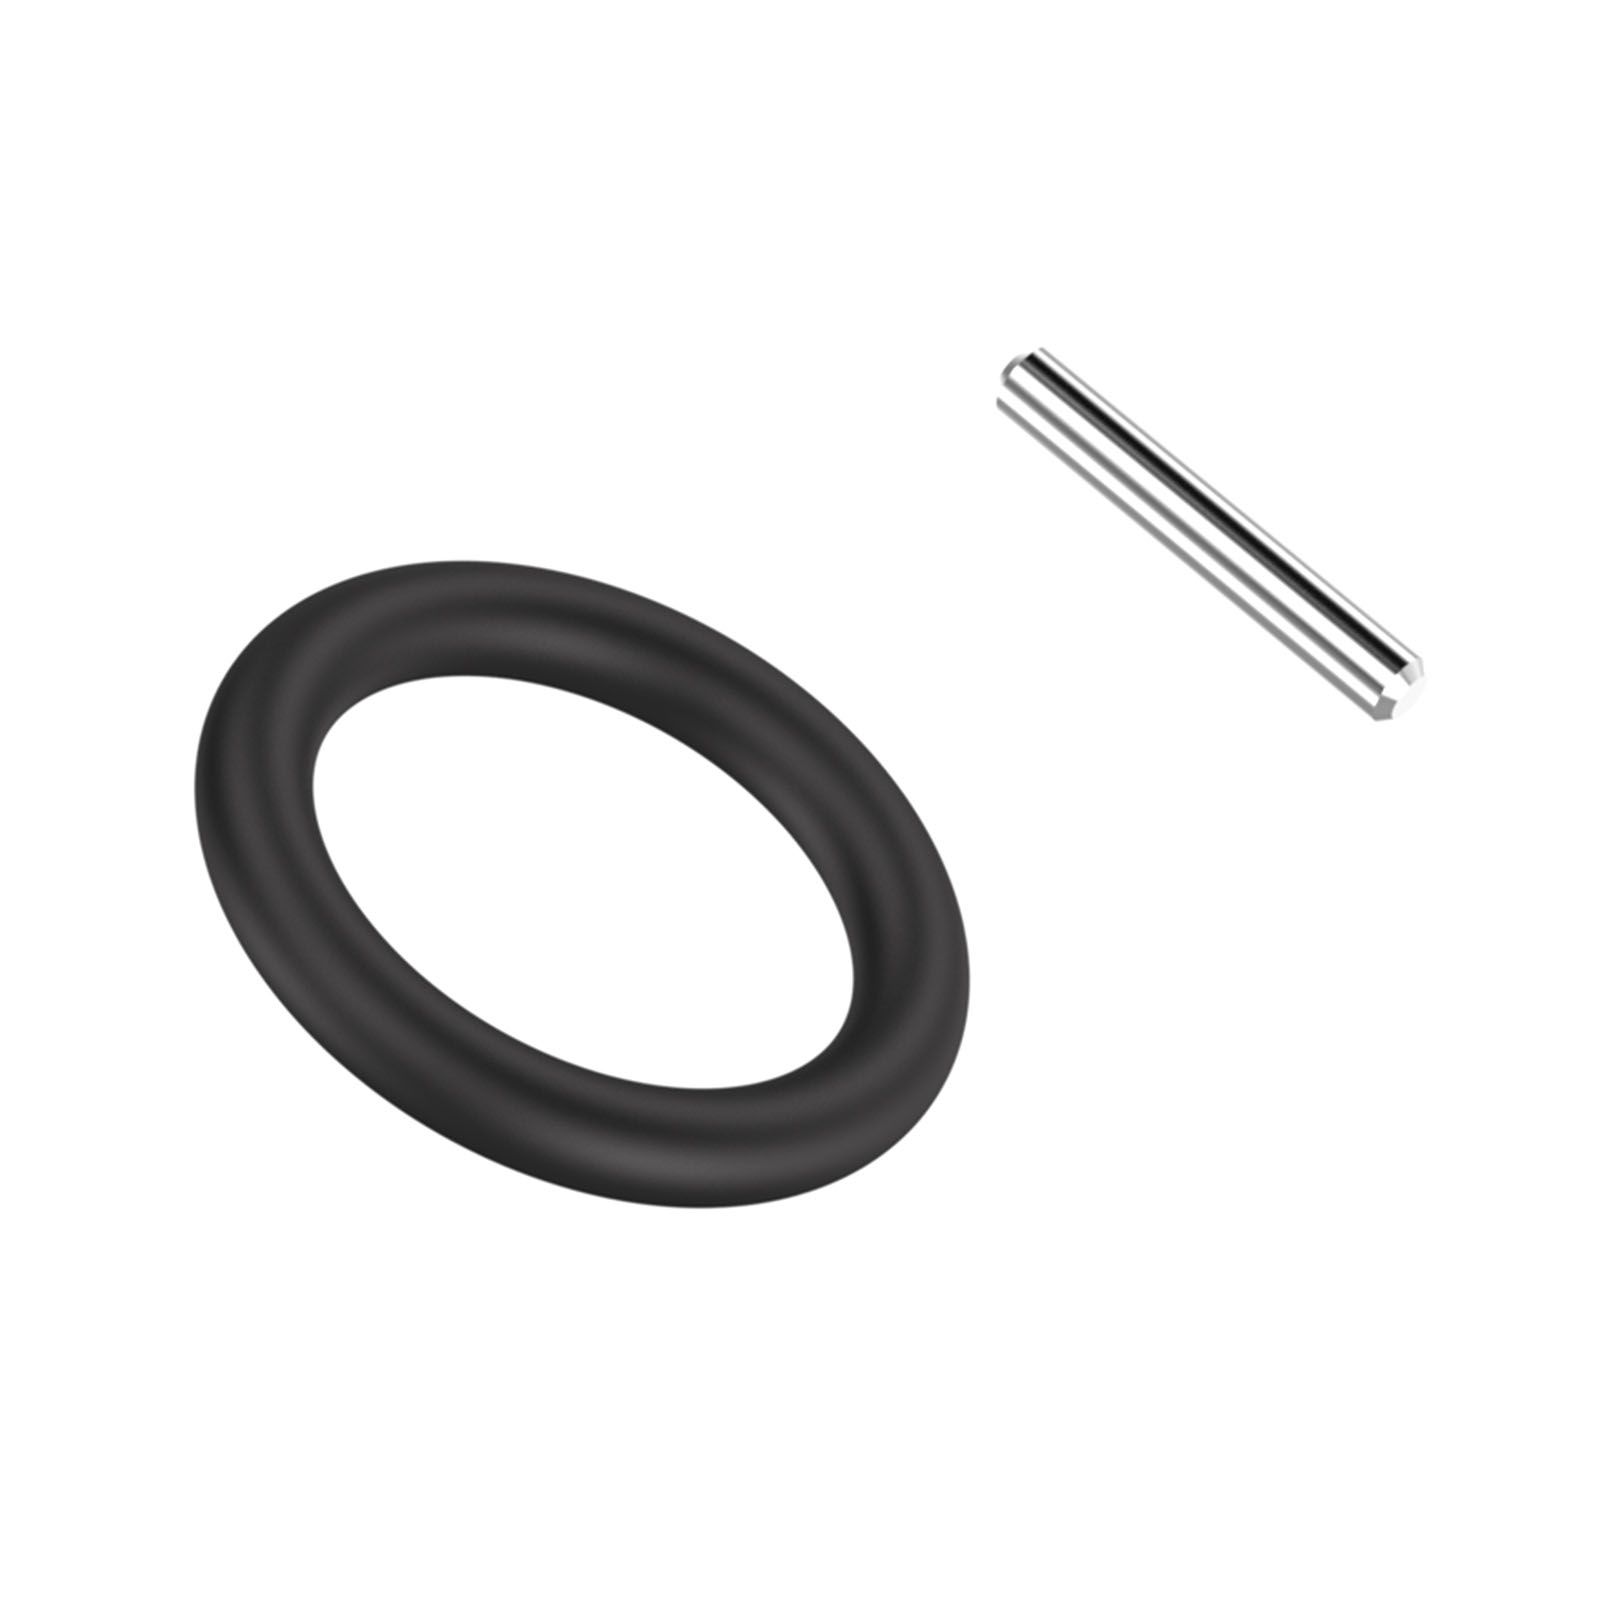 Pin and O-ring set-SQ1/2-d30 product photo